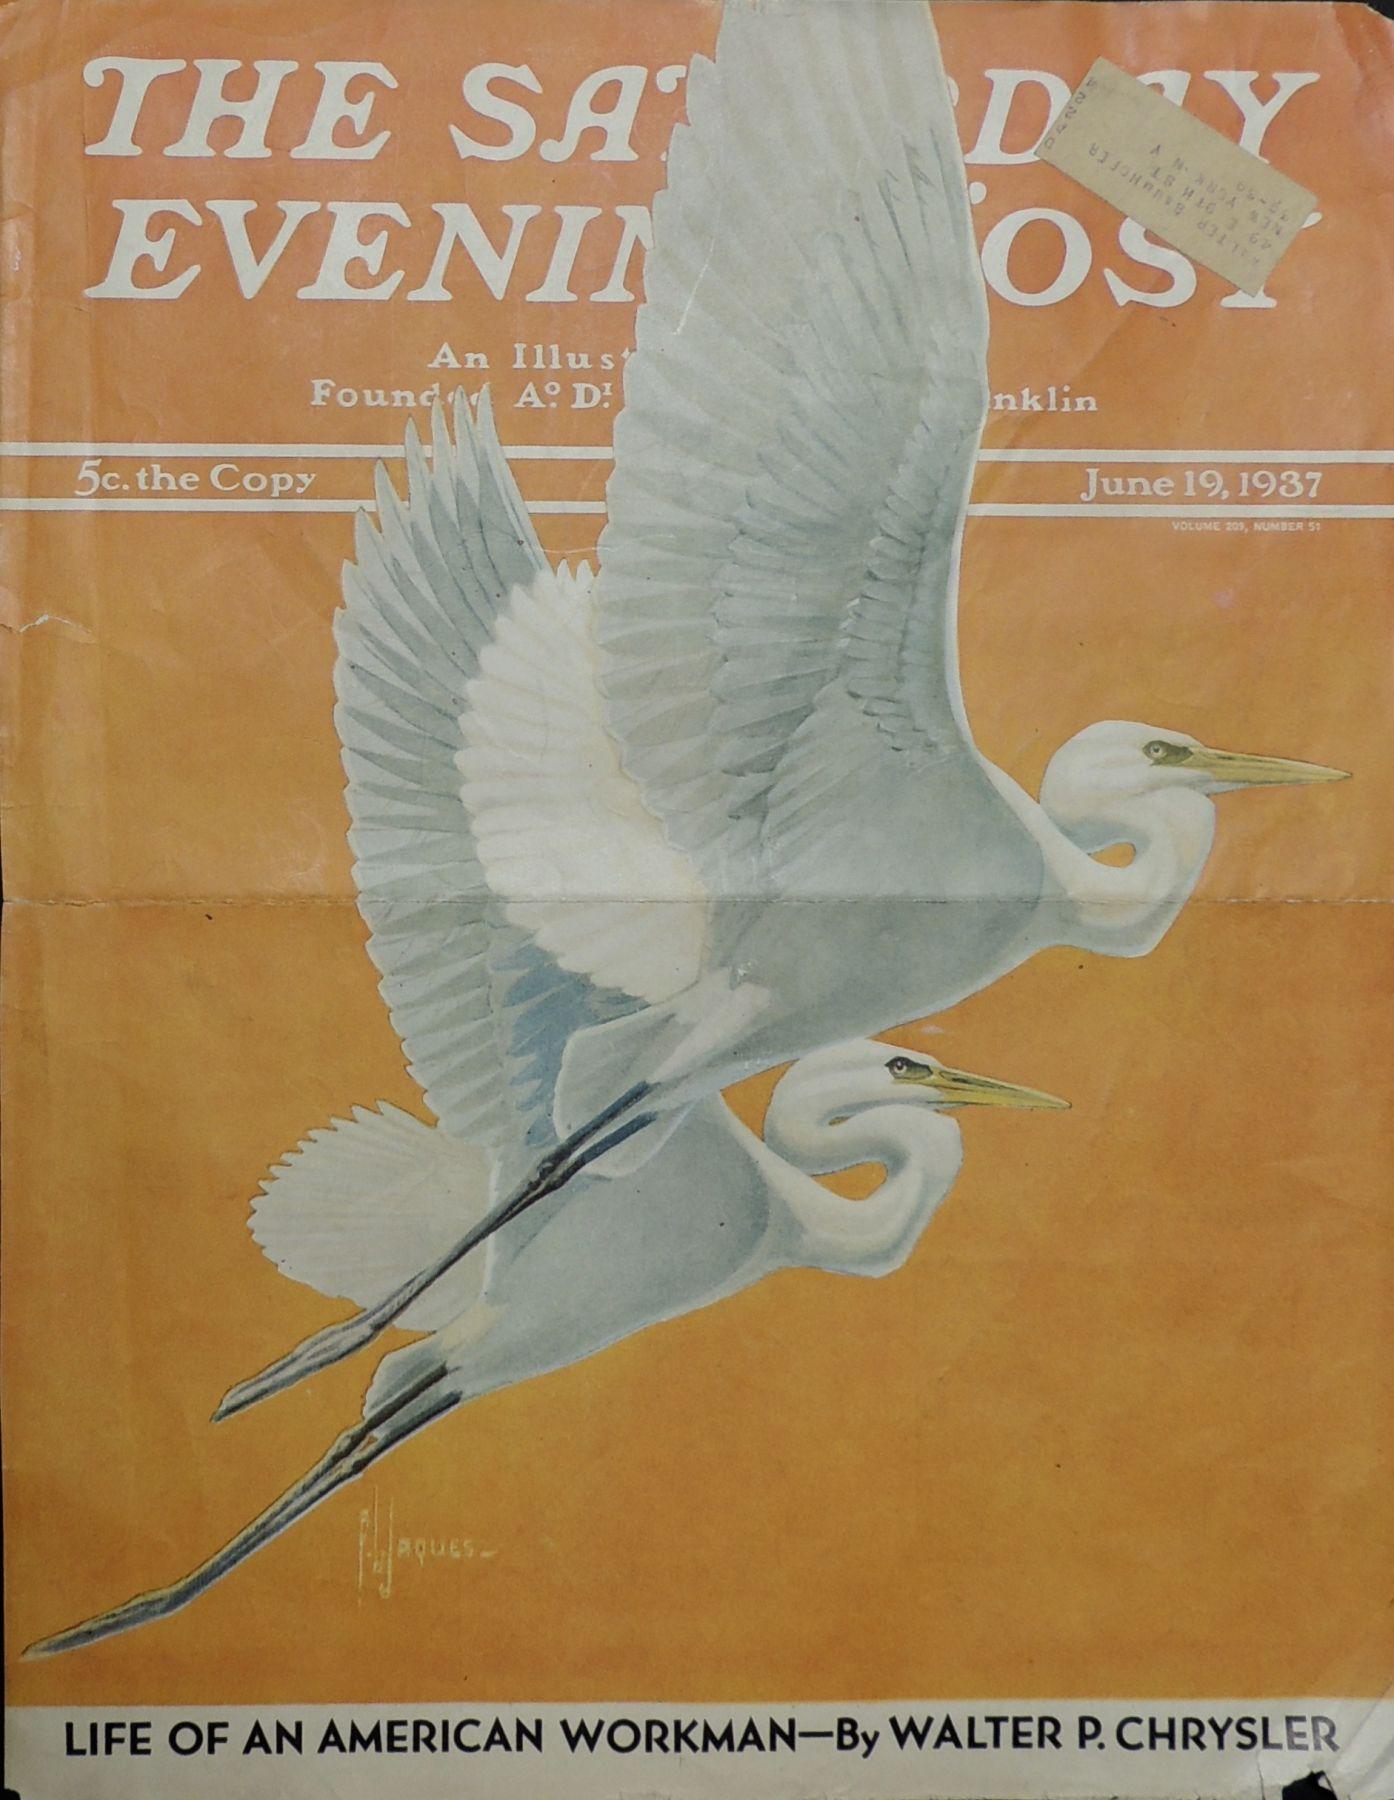 Saturday Evening Post-Cover, 19. Juni 1937 (Braun), Animal Painting, von Francis Lee Jacques